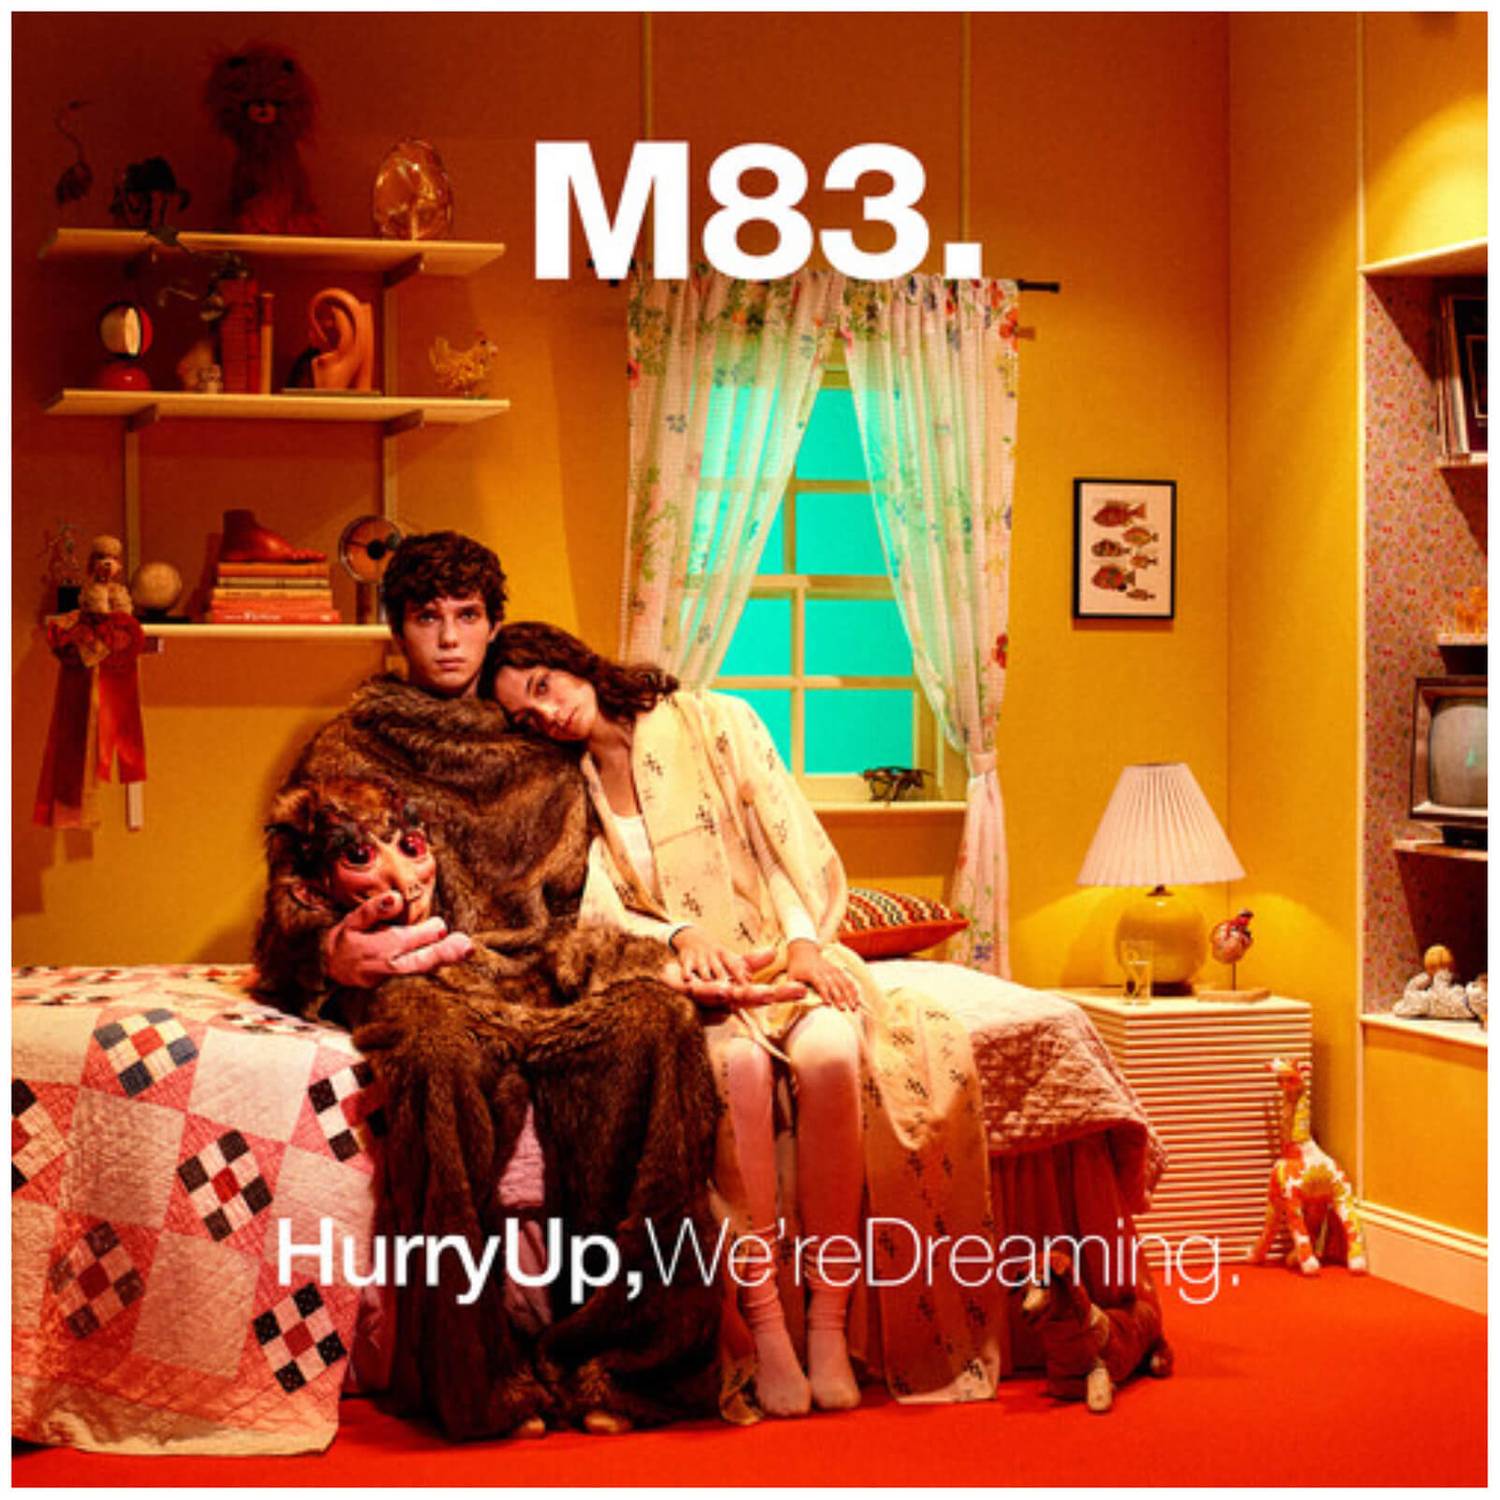 M83 "Hurry Up, We're Dreaming" 10th Anniversary Orange 2LP